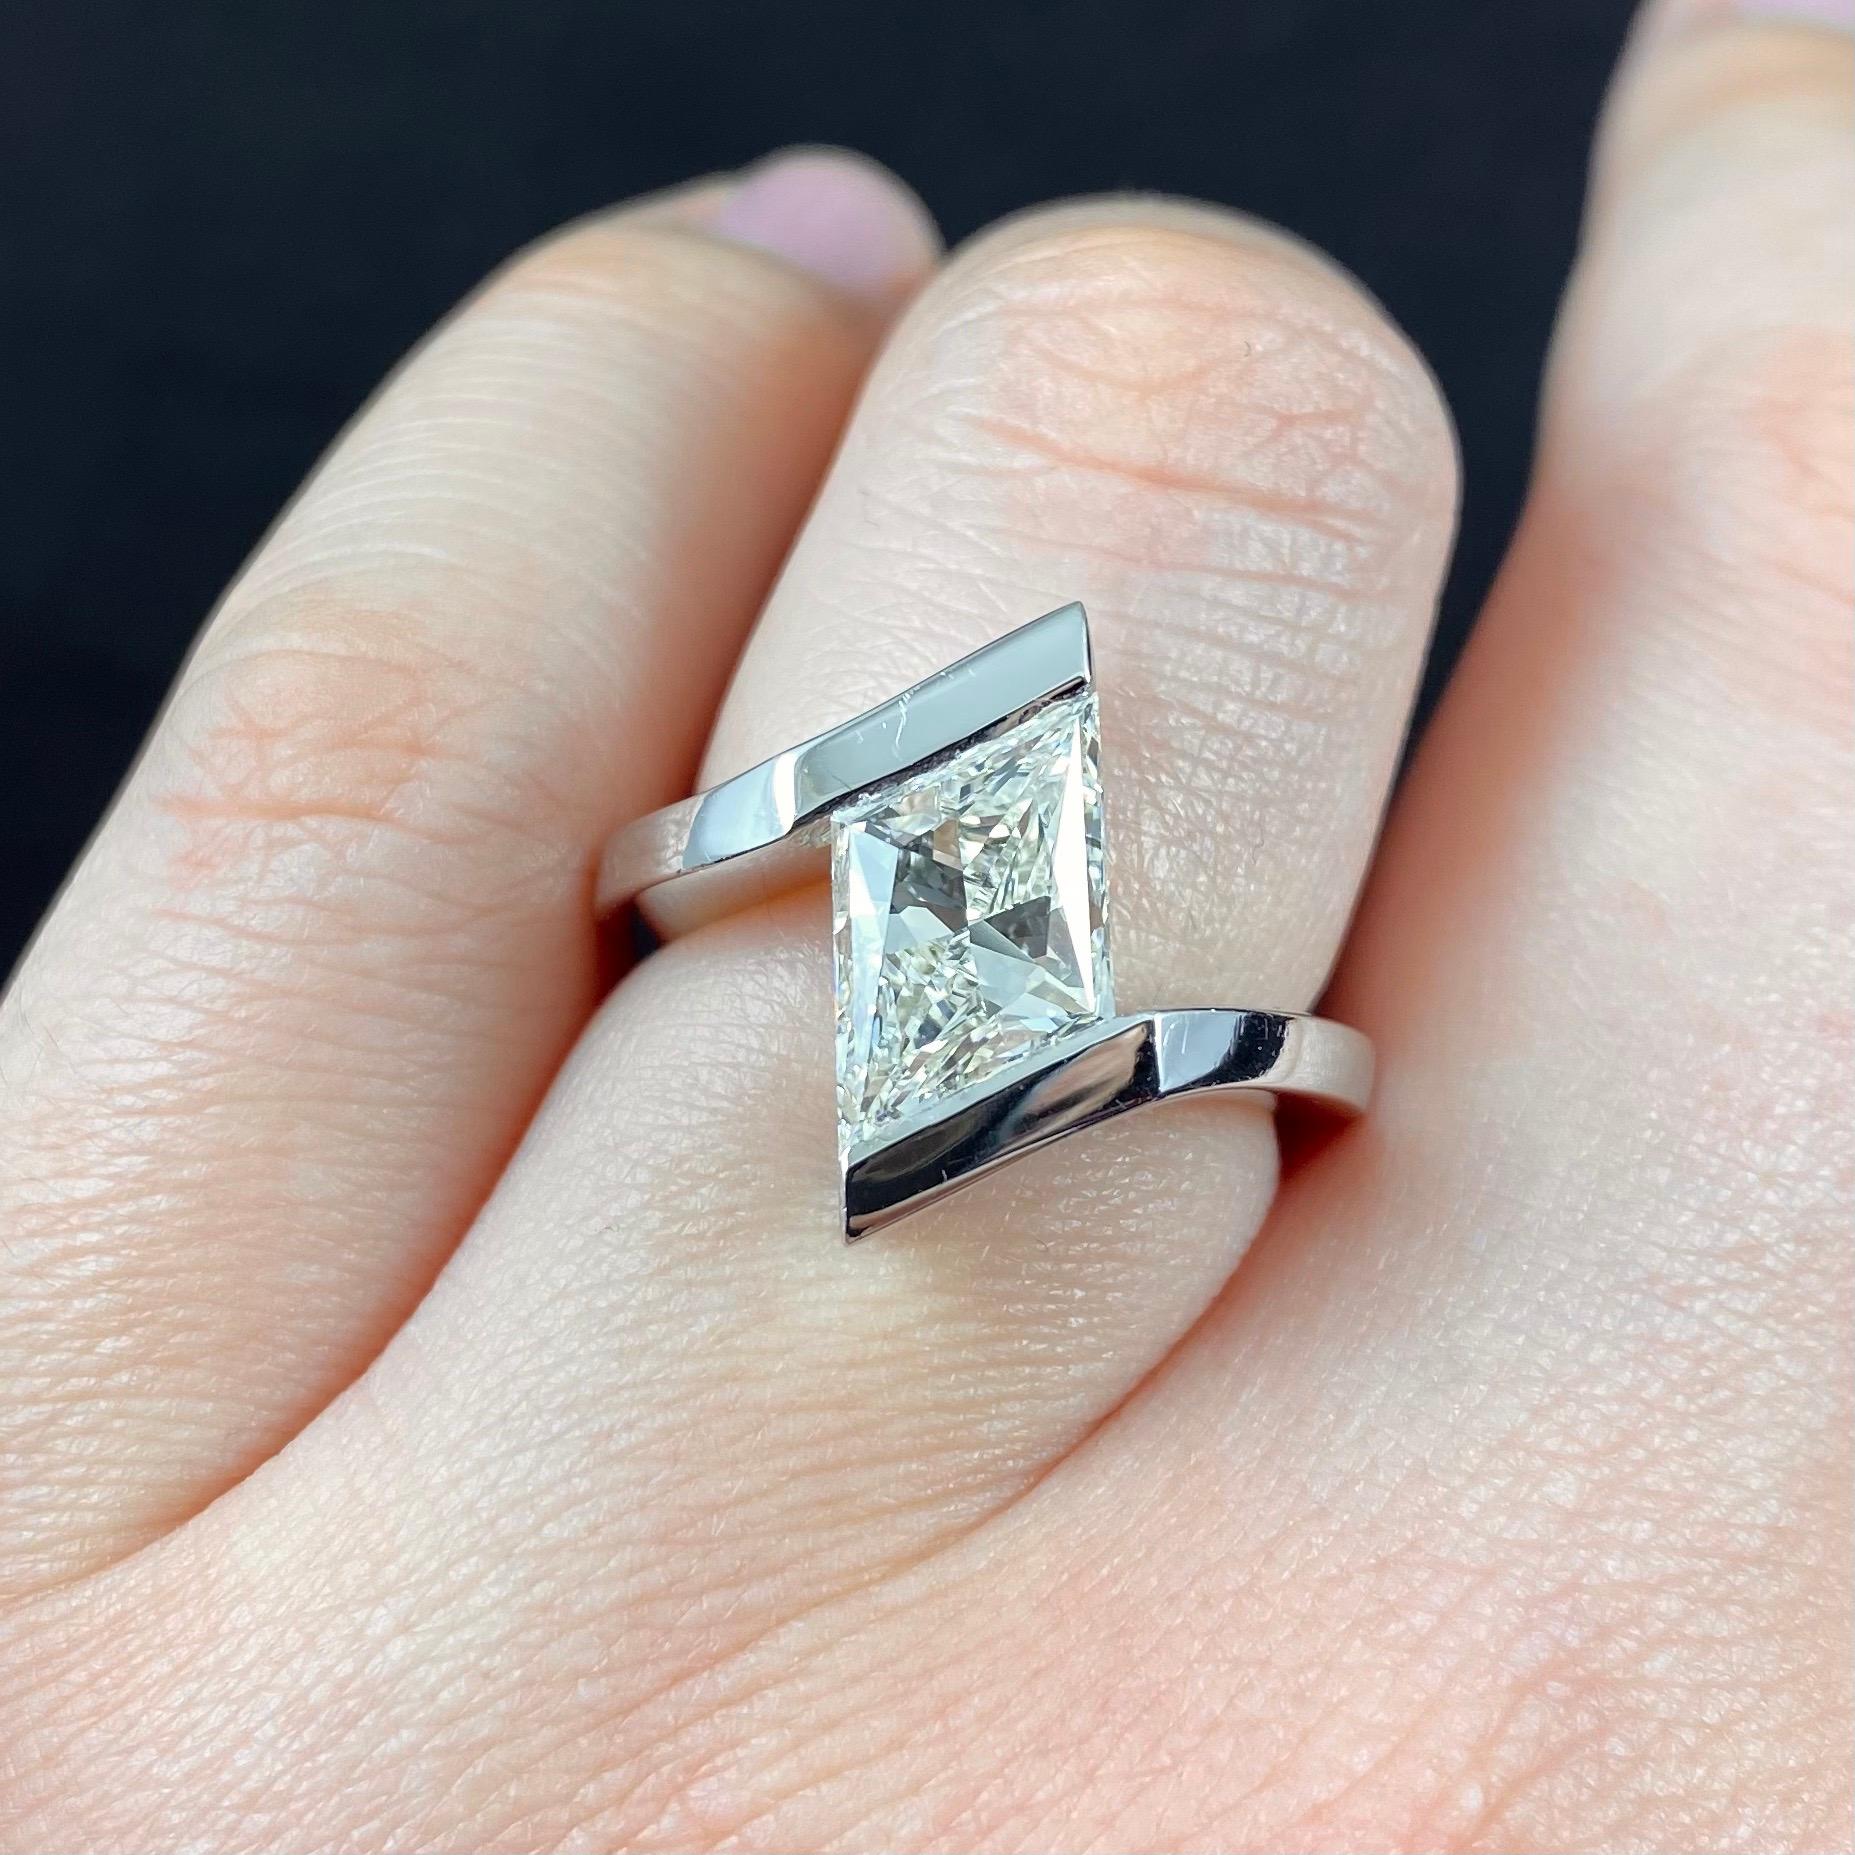 rhombus shaped diamond ring